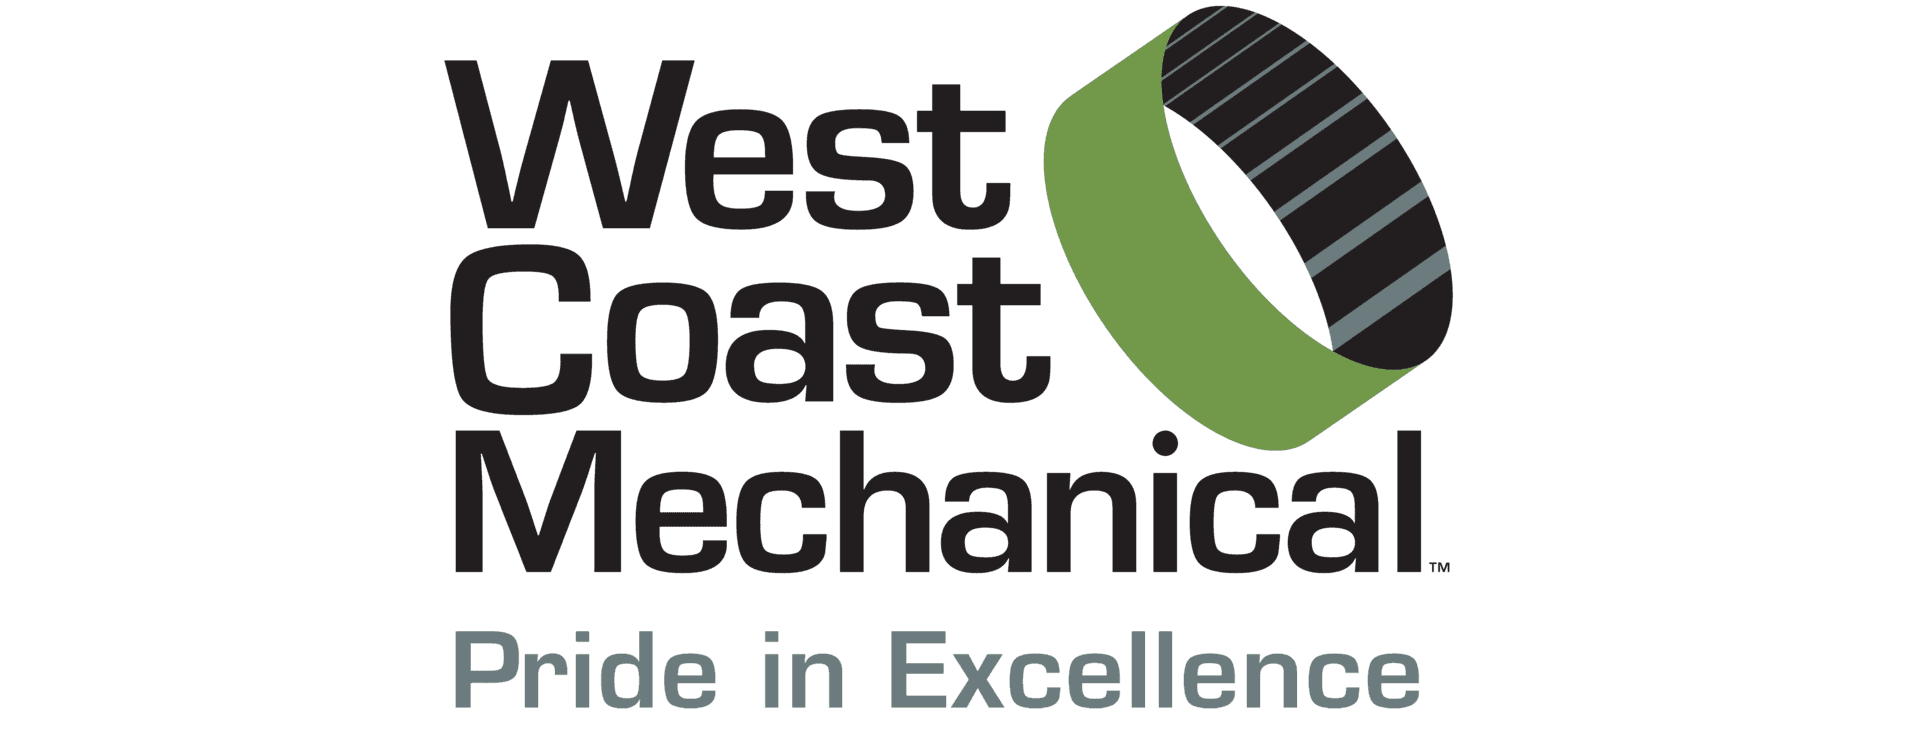 West Coast Mechanical Group Logo